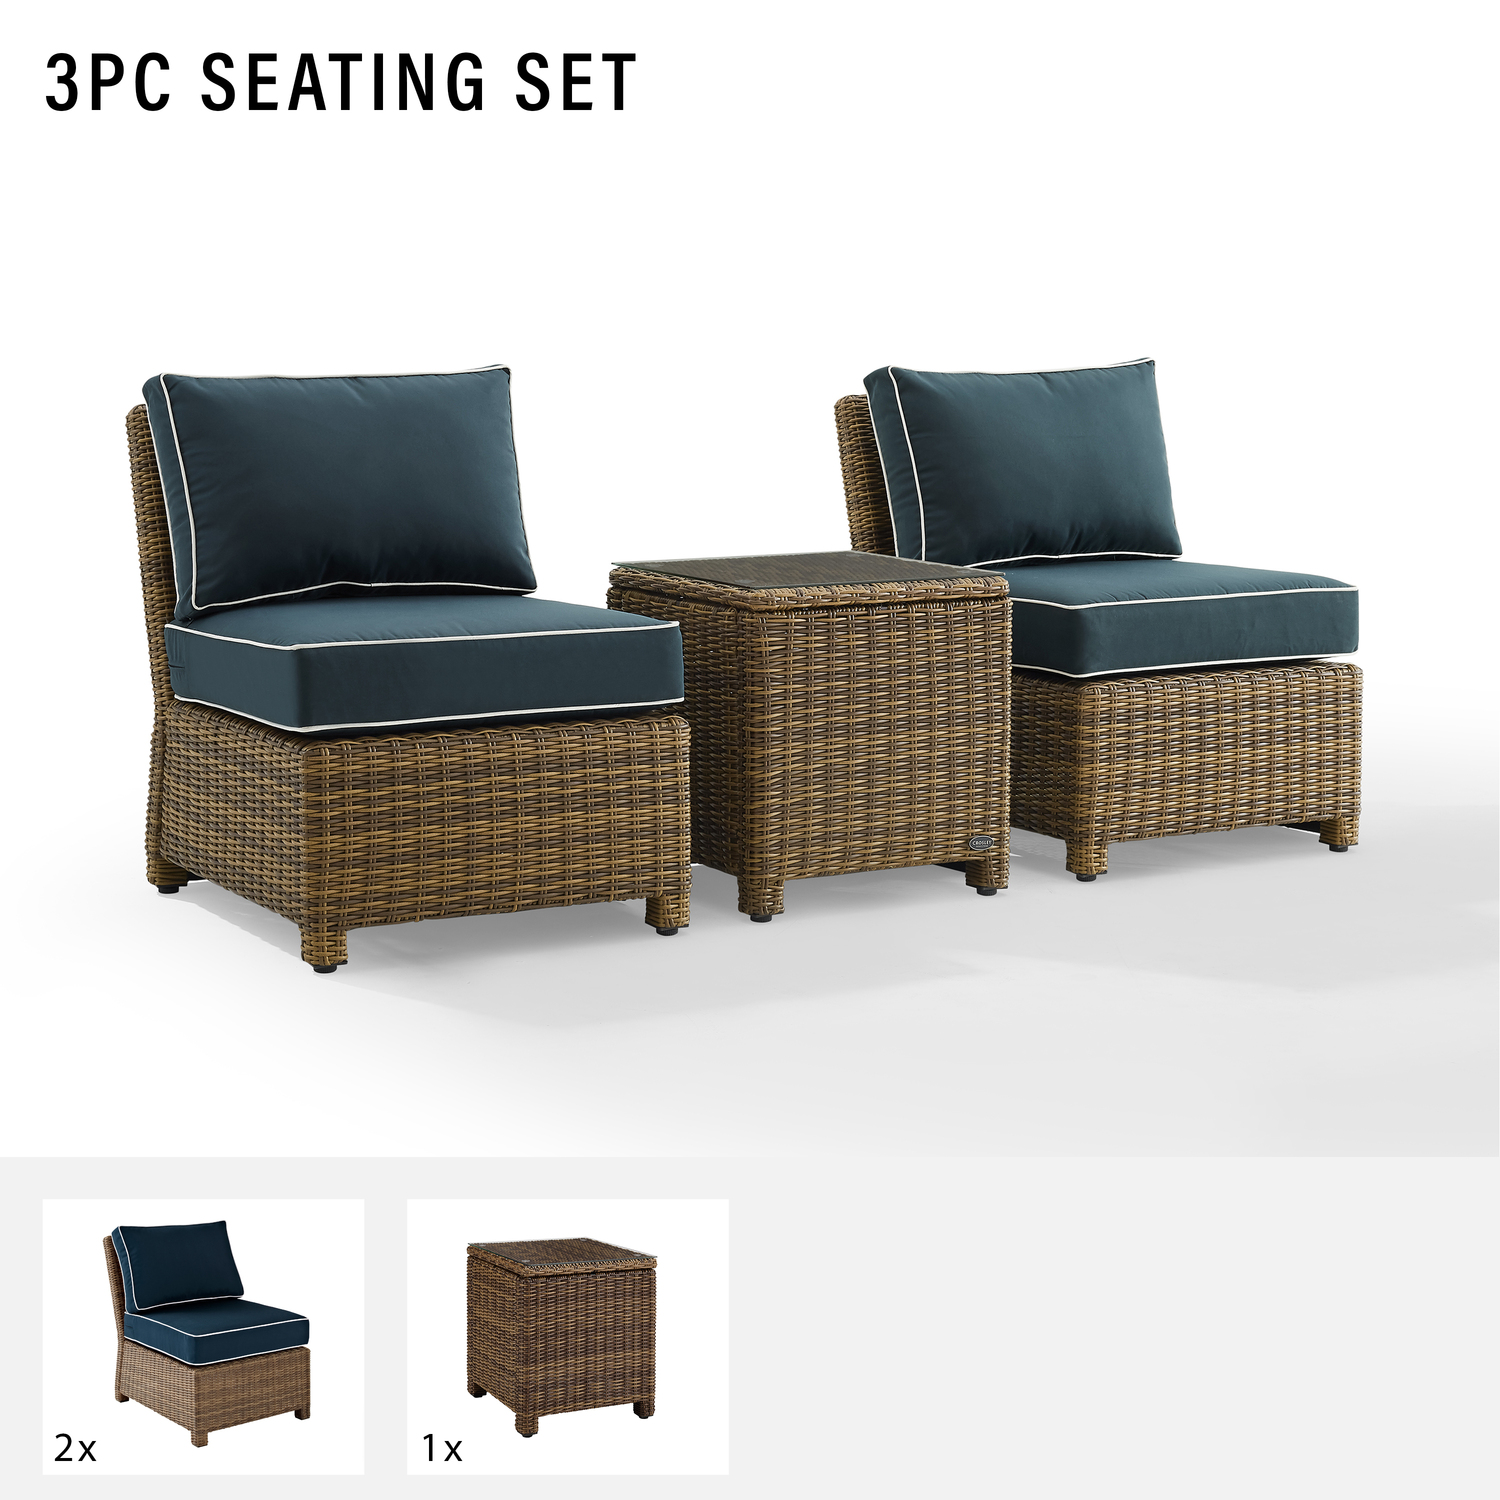 Crosley Furniture Bradenton 3PC Wicker & Fabric Outdoor Chair Set in Navy/Brown - image 5 of 6